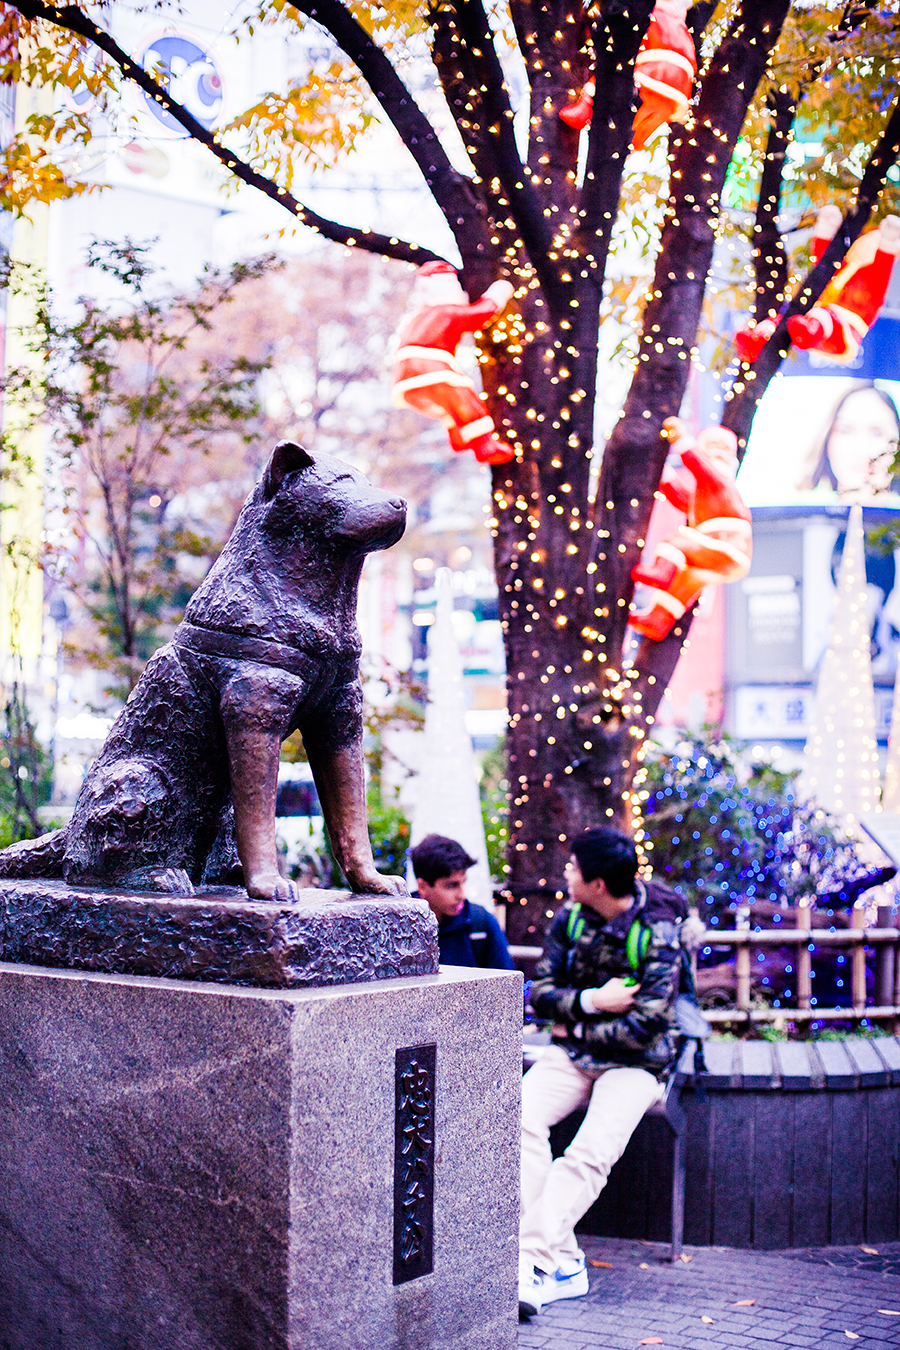 Statue of Hachiko in Shibuya, Japan.